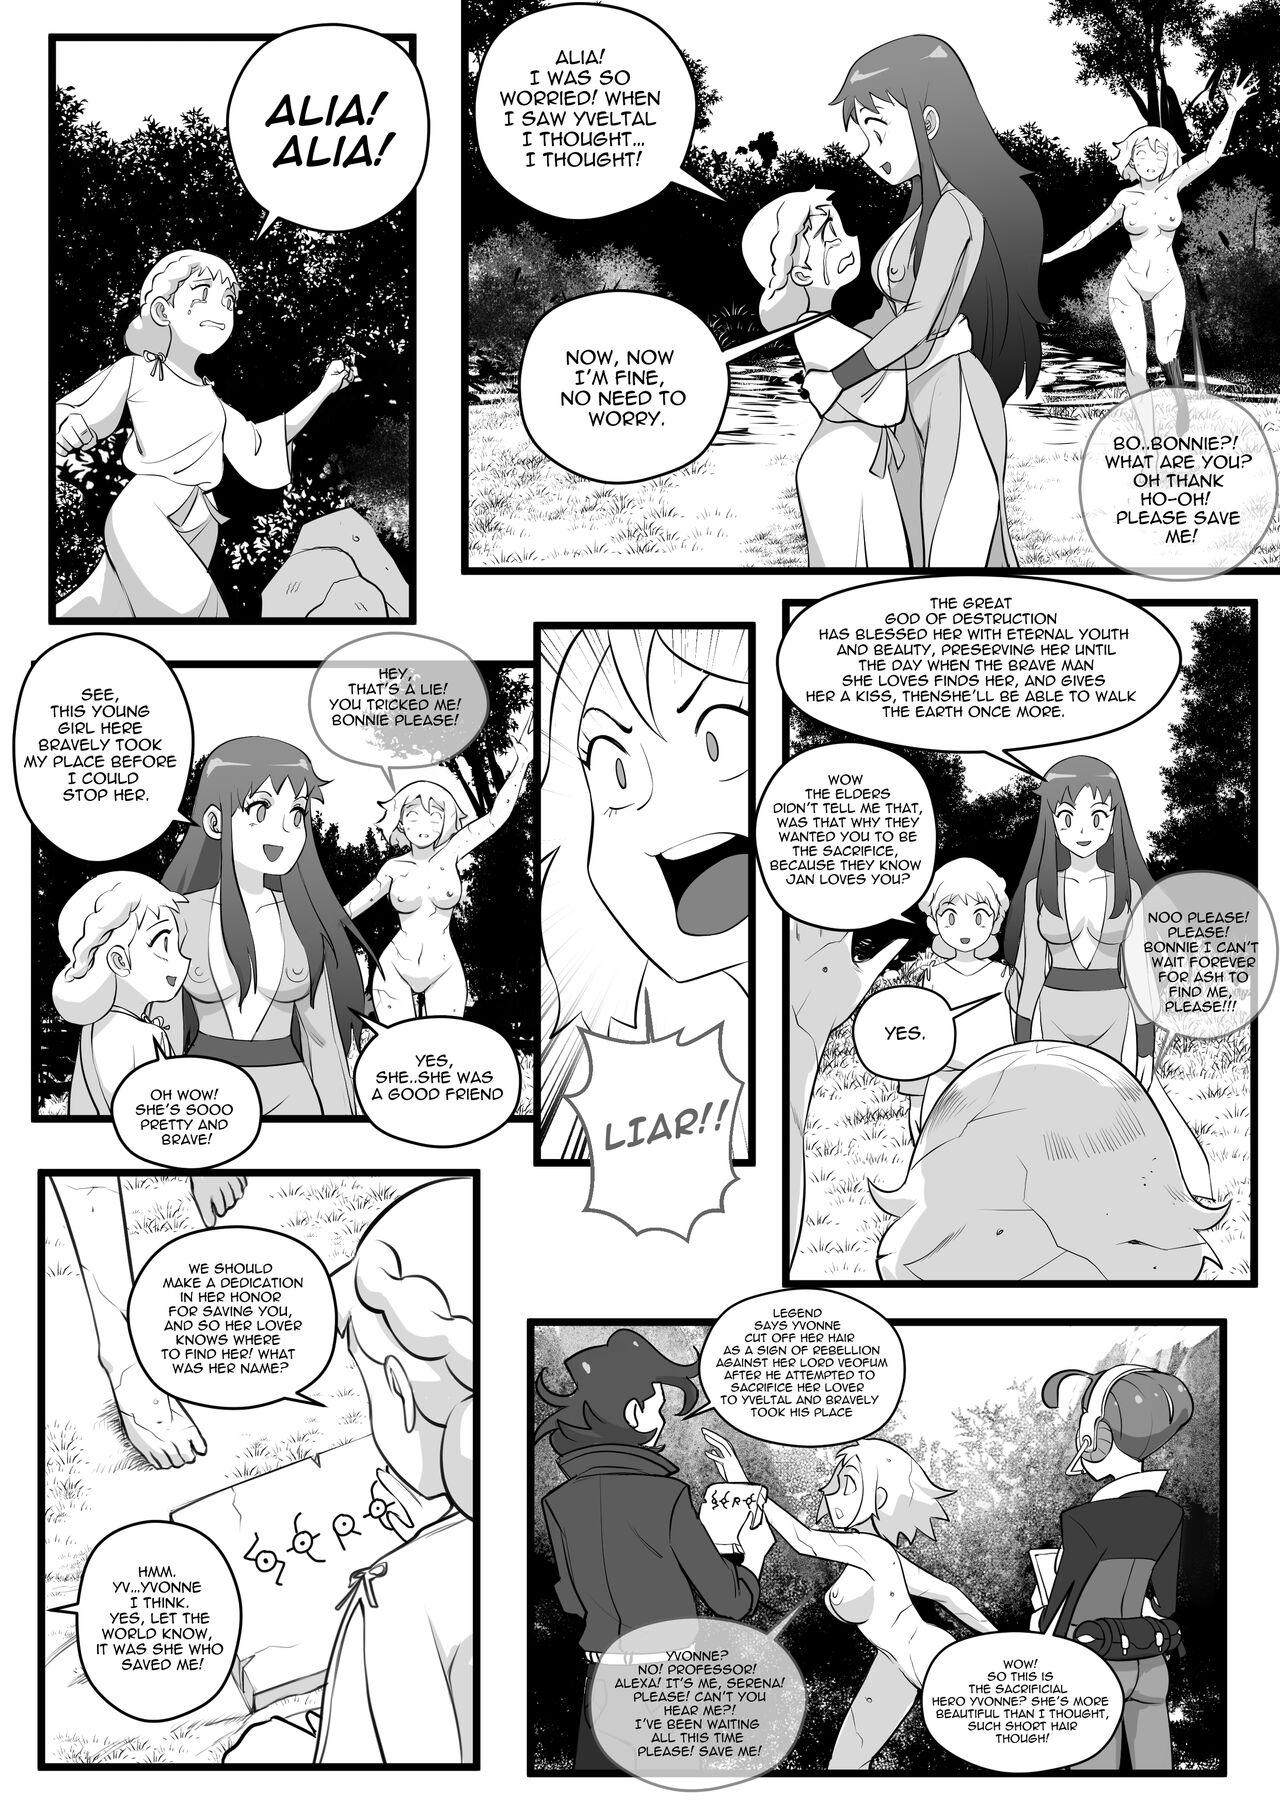 Stunning Serena: A Petrified Sacrifice though time! - Pokemon | pocket monsters Fishnets - Page 4